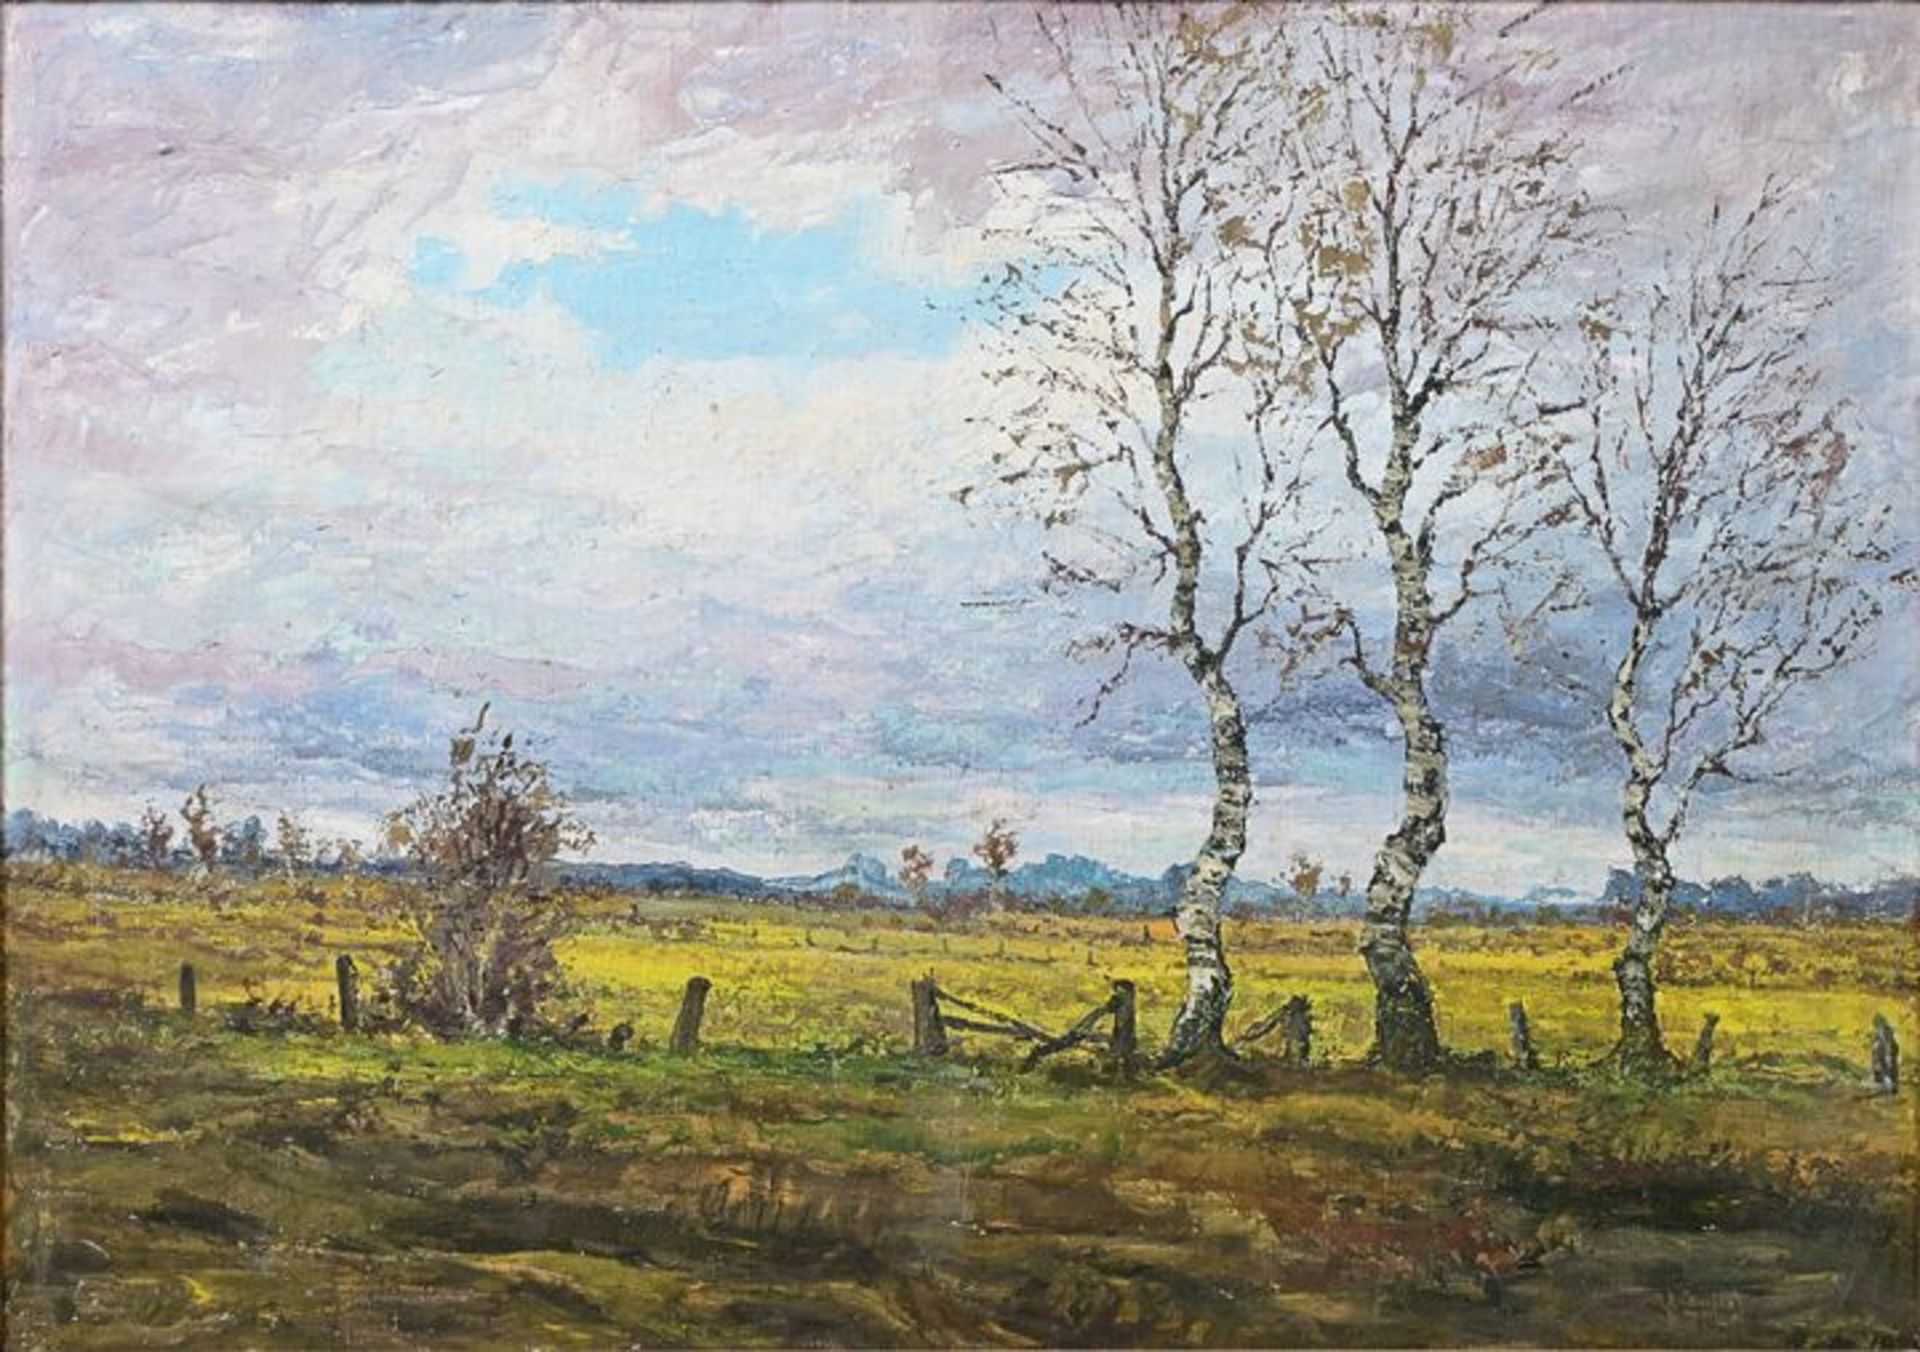 Landschaft/ landscape painting